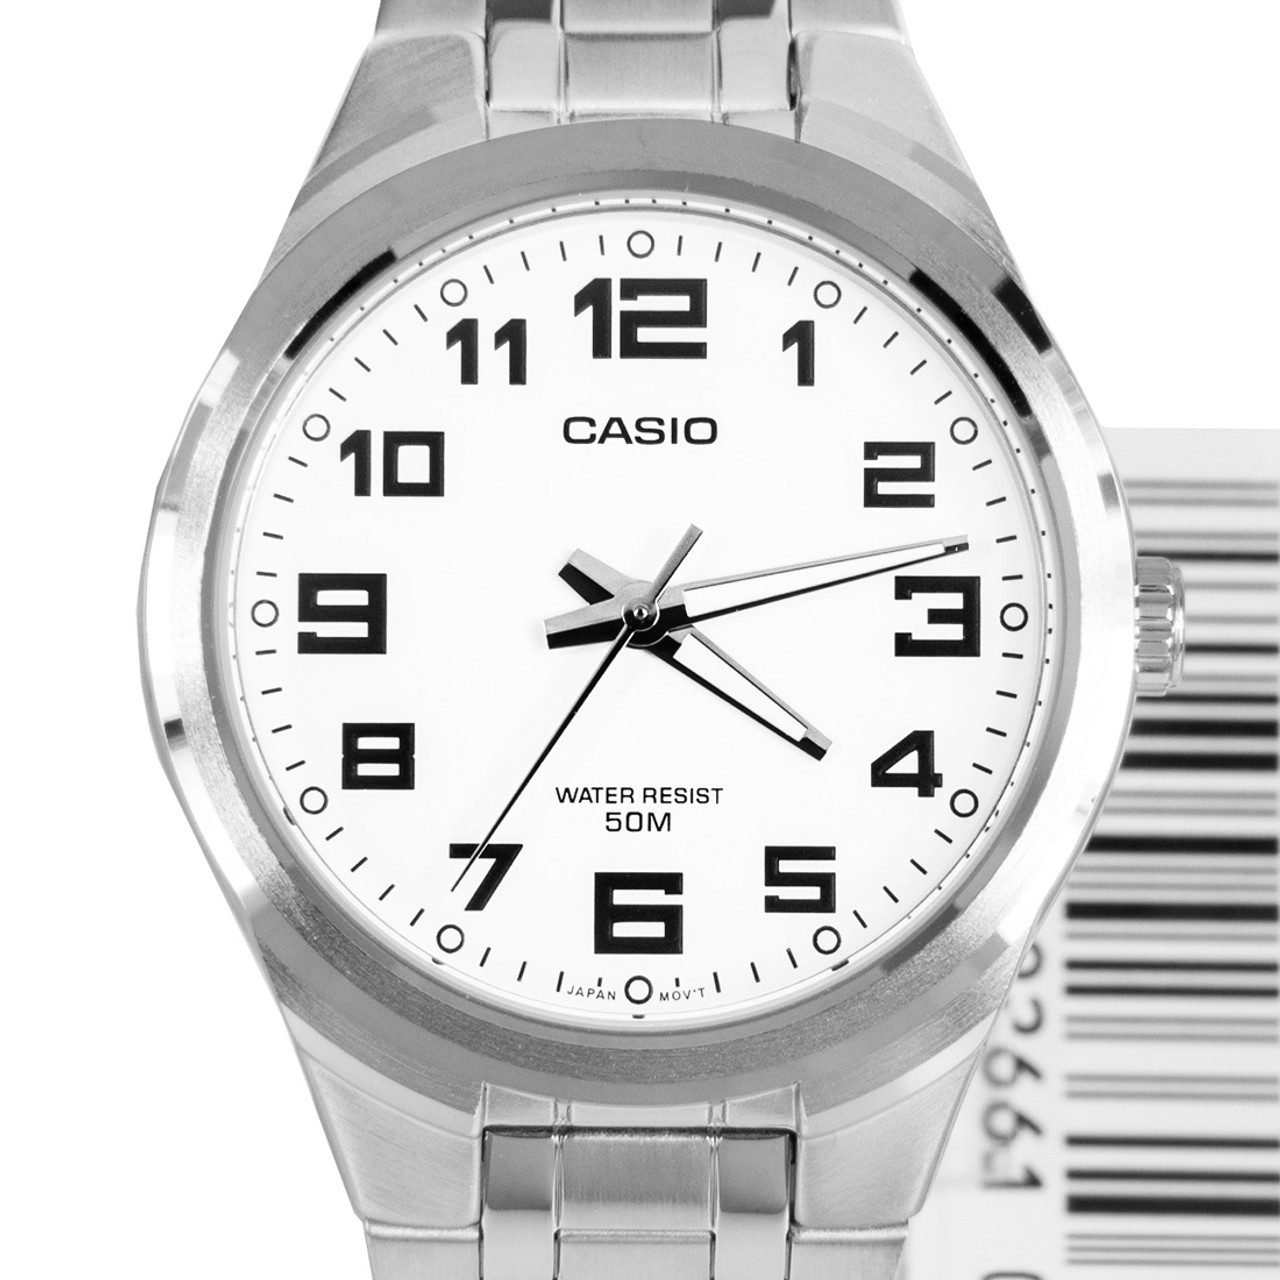 Khám phá đồng hồ Casio LTP-1310D-7BVDF